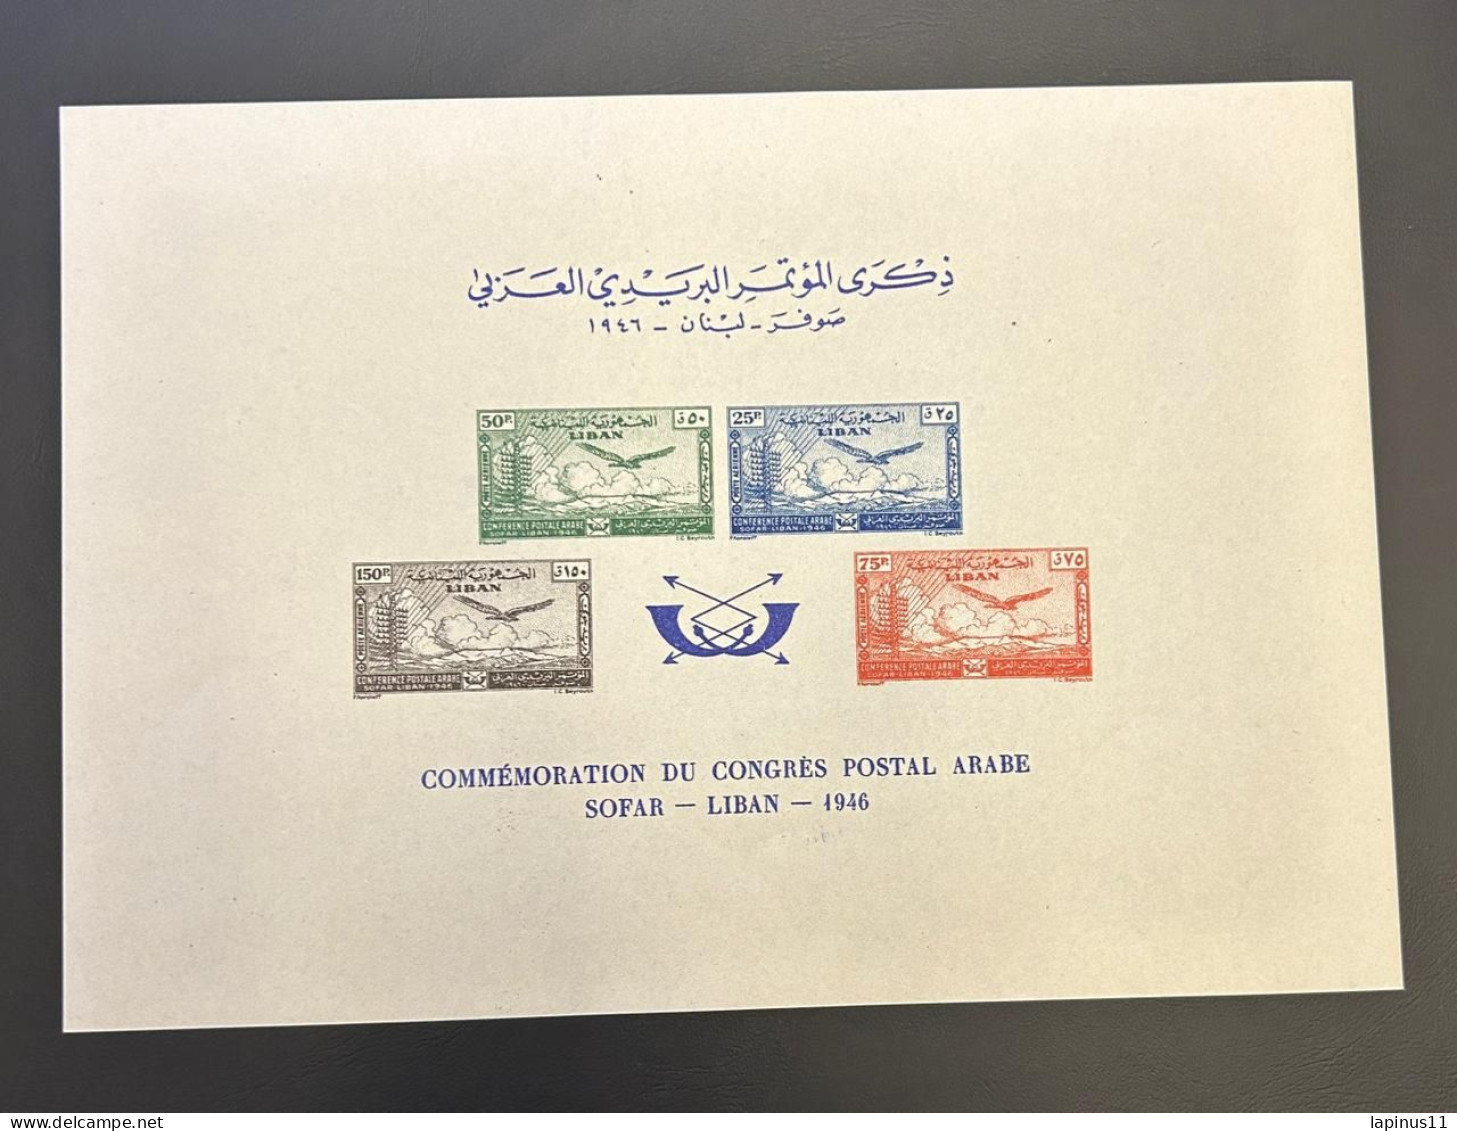 Liban Lebanon RARE Bloc SAWFAR 1946 Congres Postale Arabe MNH - Libano